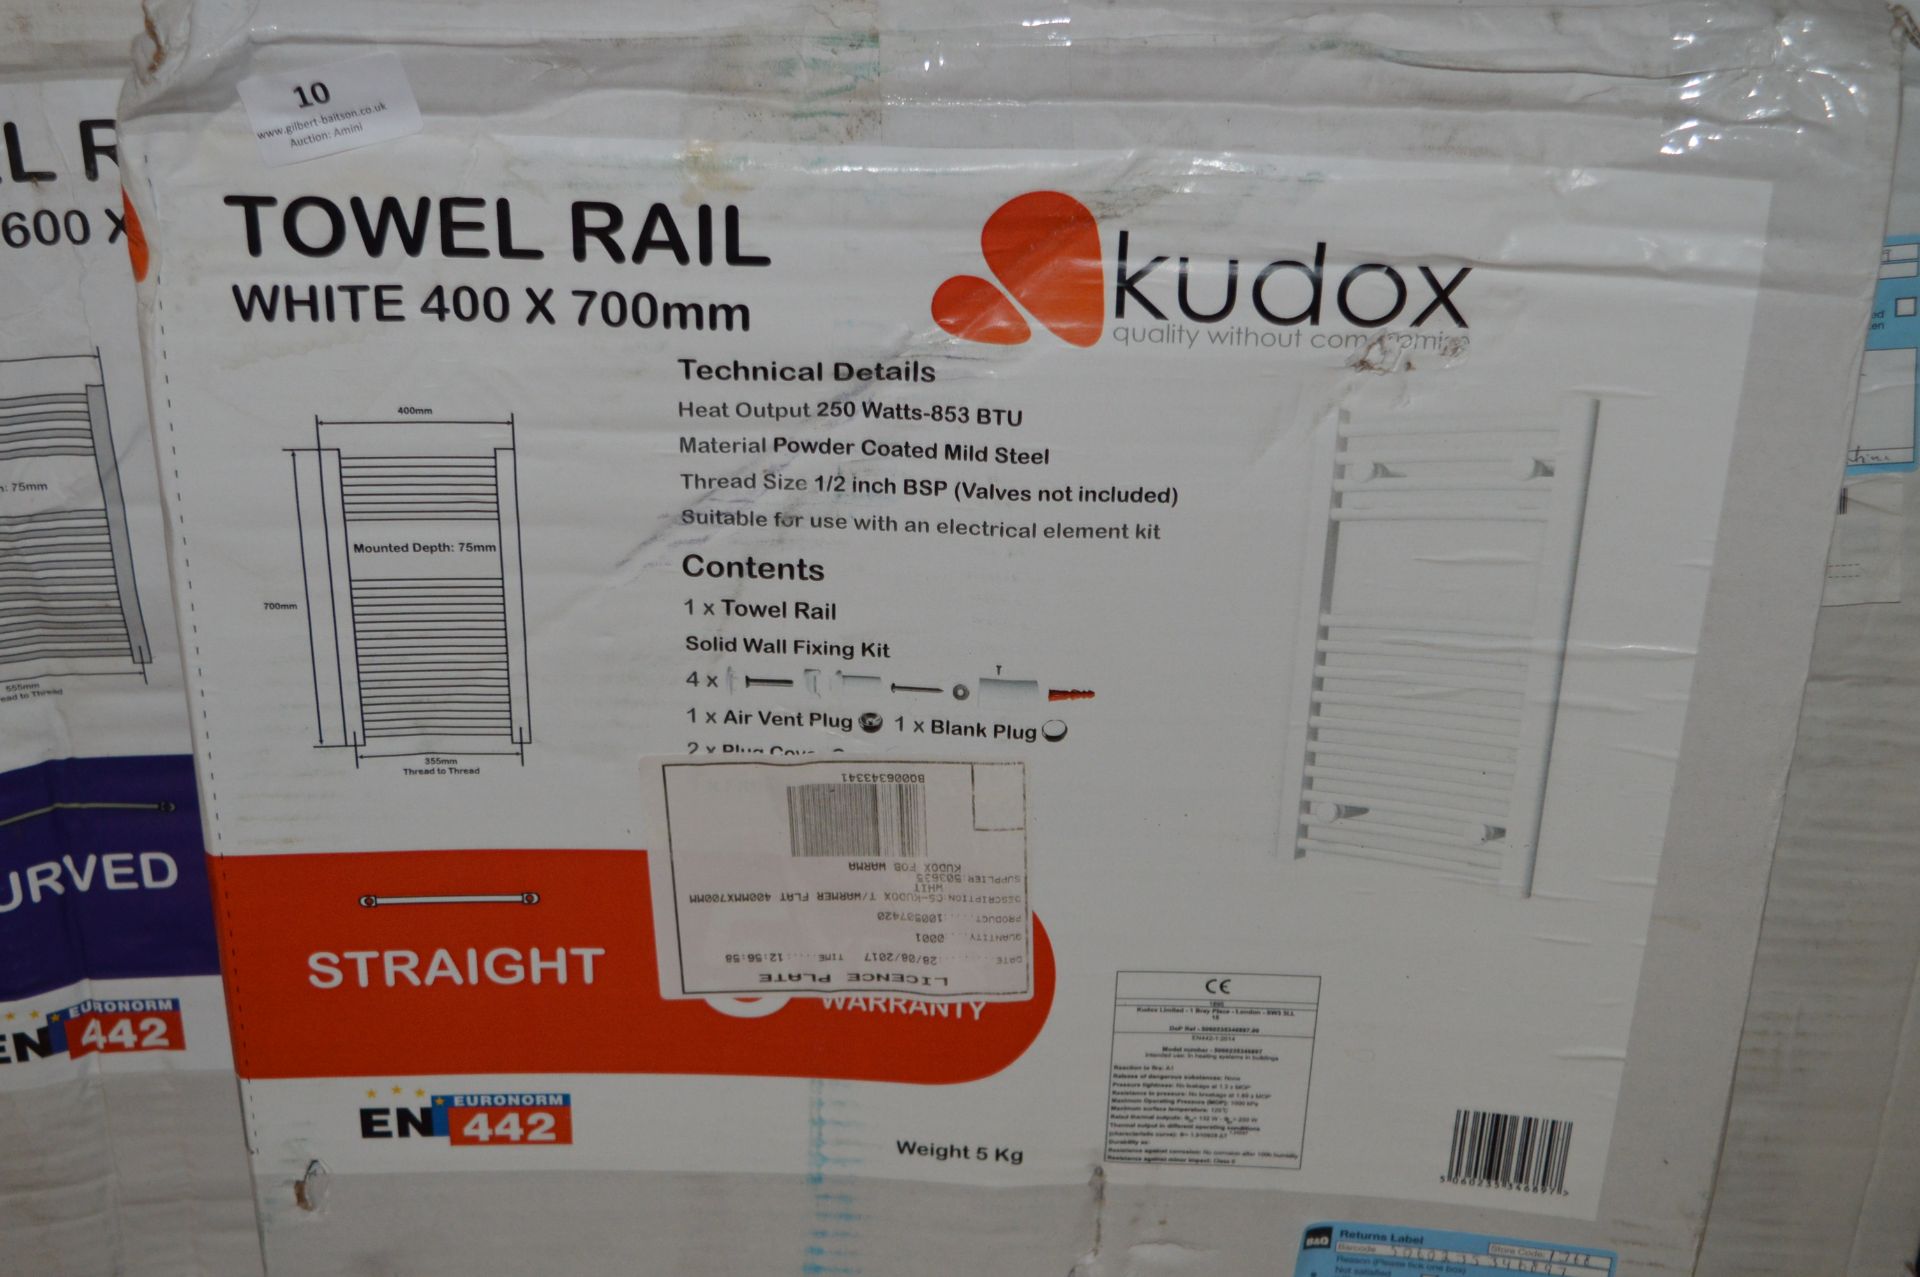 *Kudox White 400x700 Towel Rail